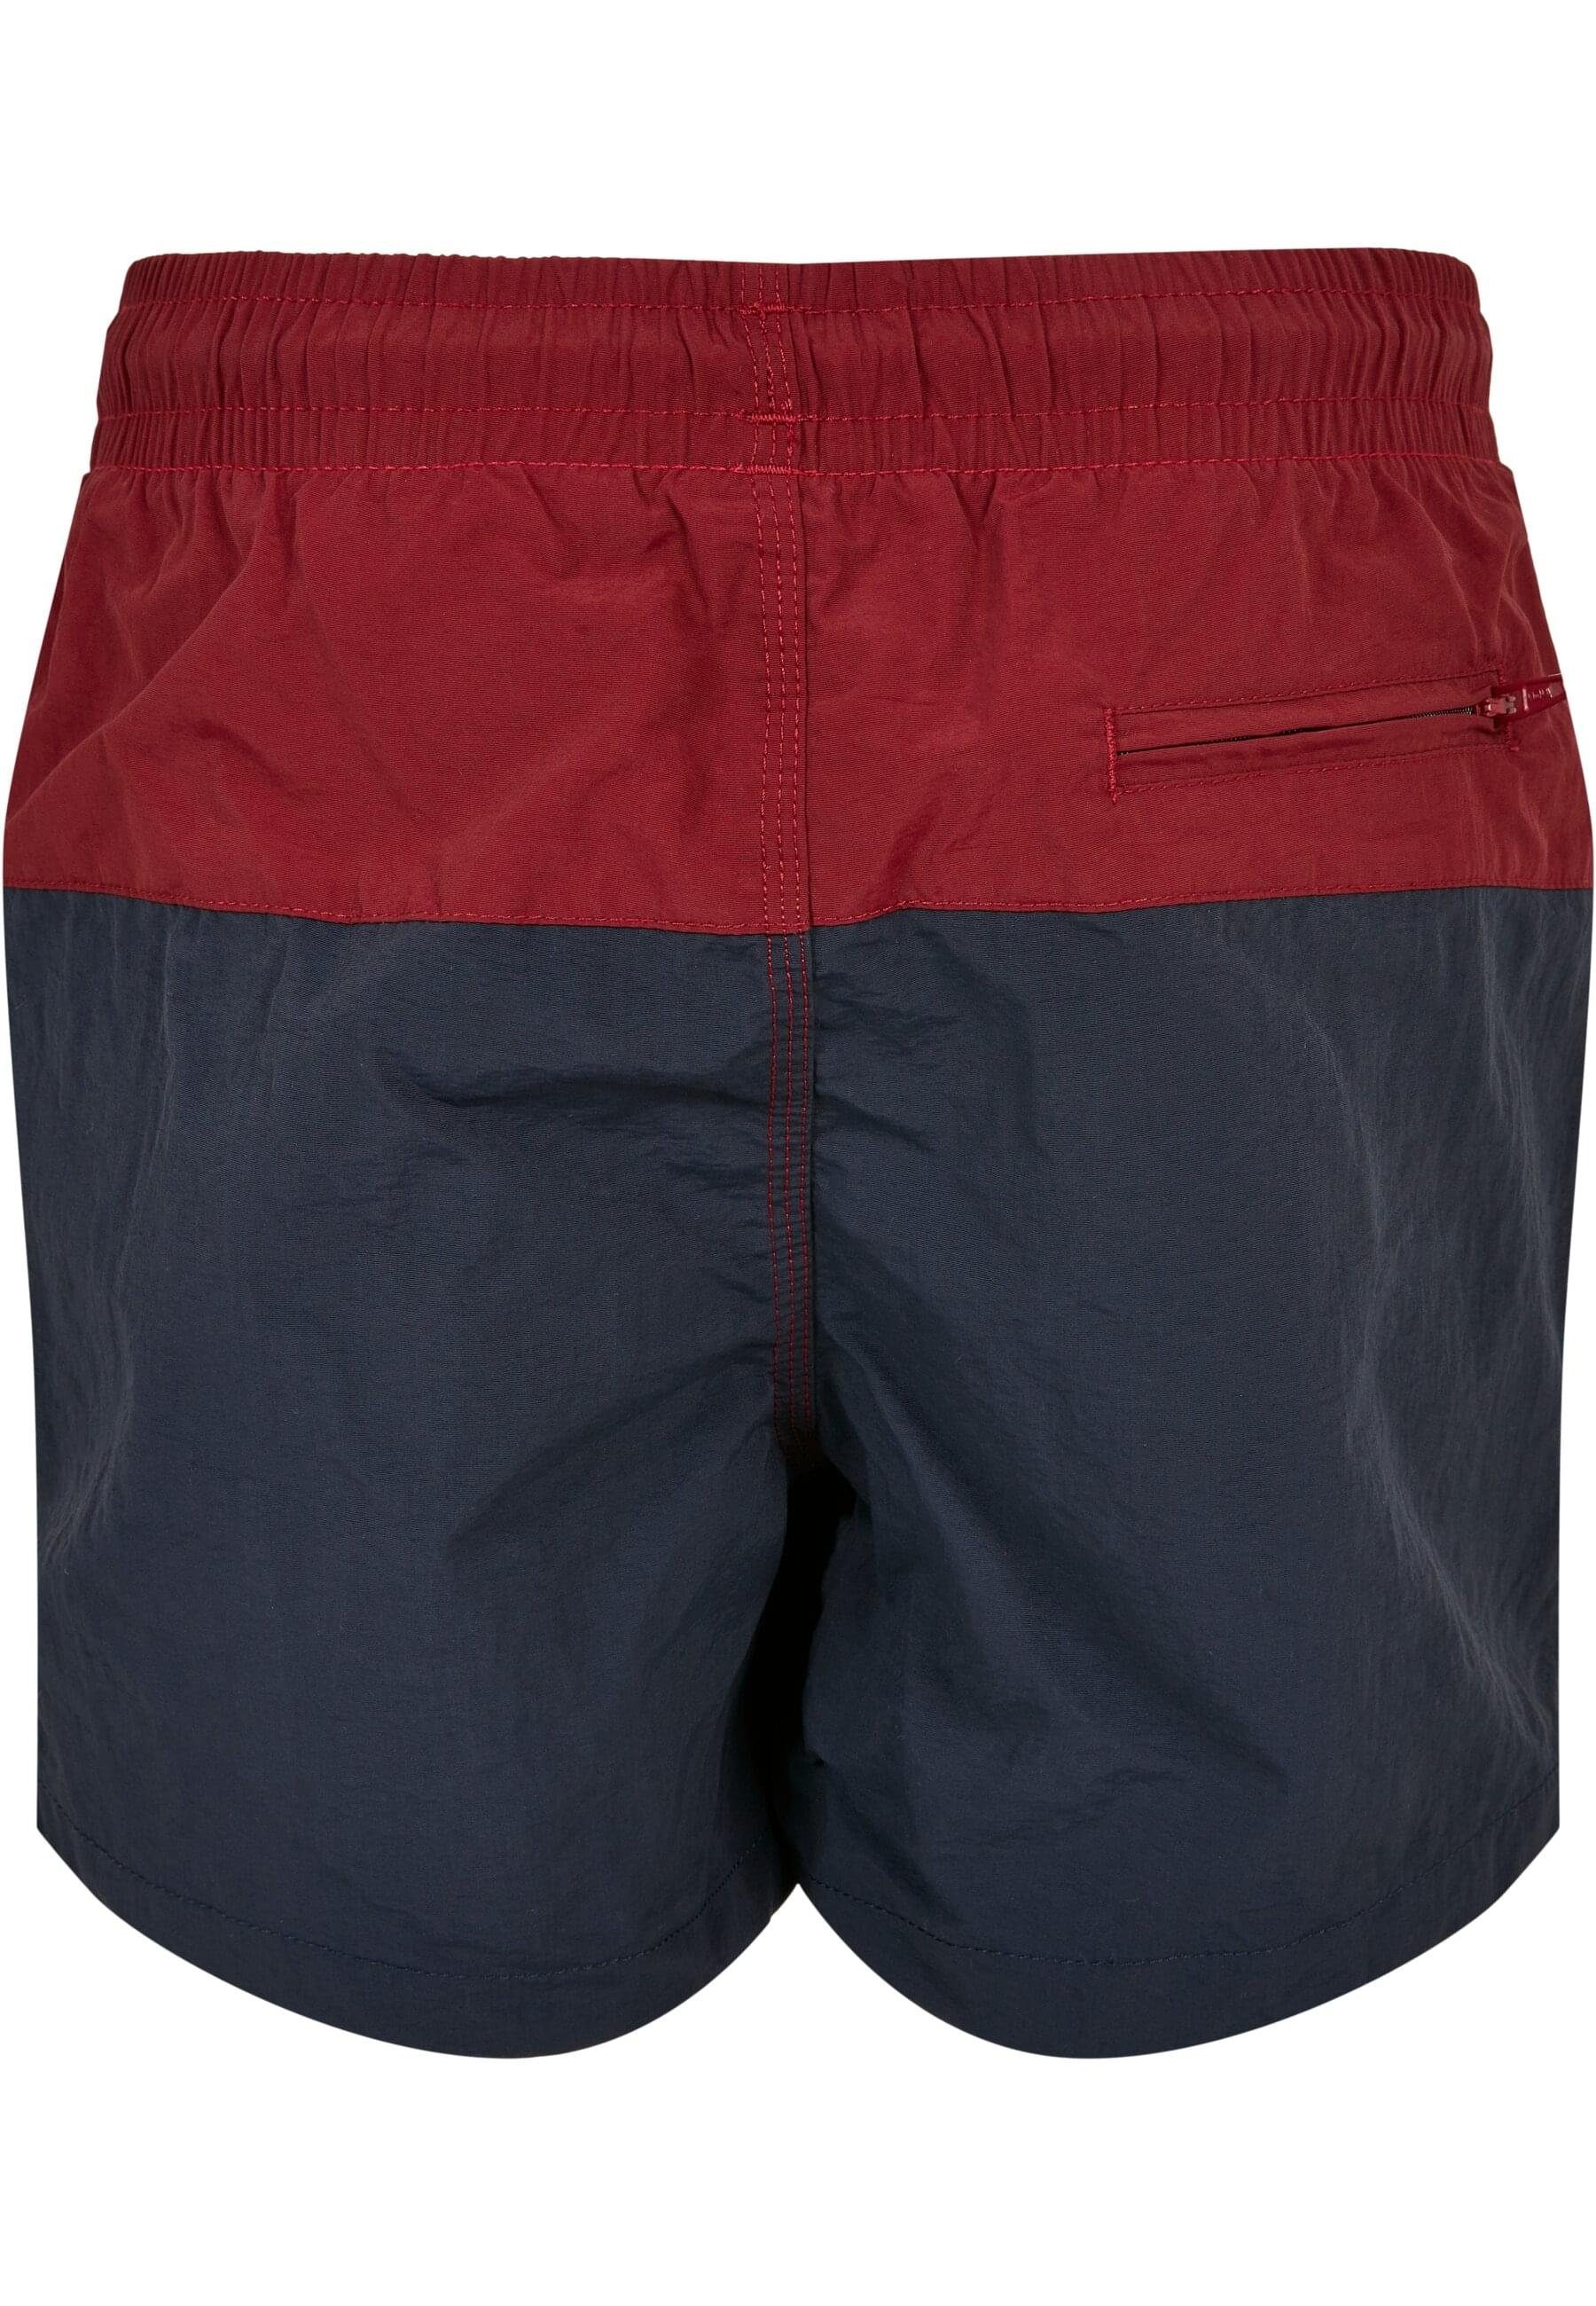 Boys CLASSICS URBAN Block Shorts Swim Herren navy/burgundy Badeshorts